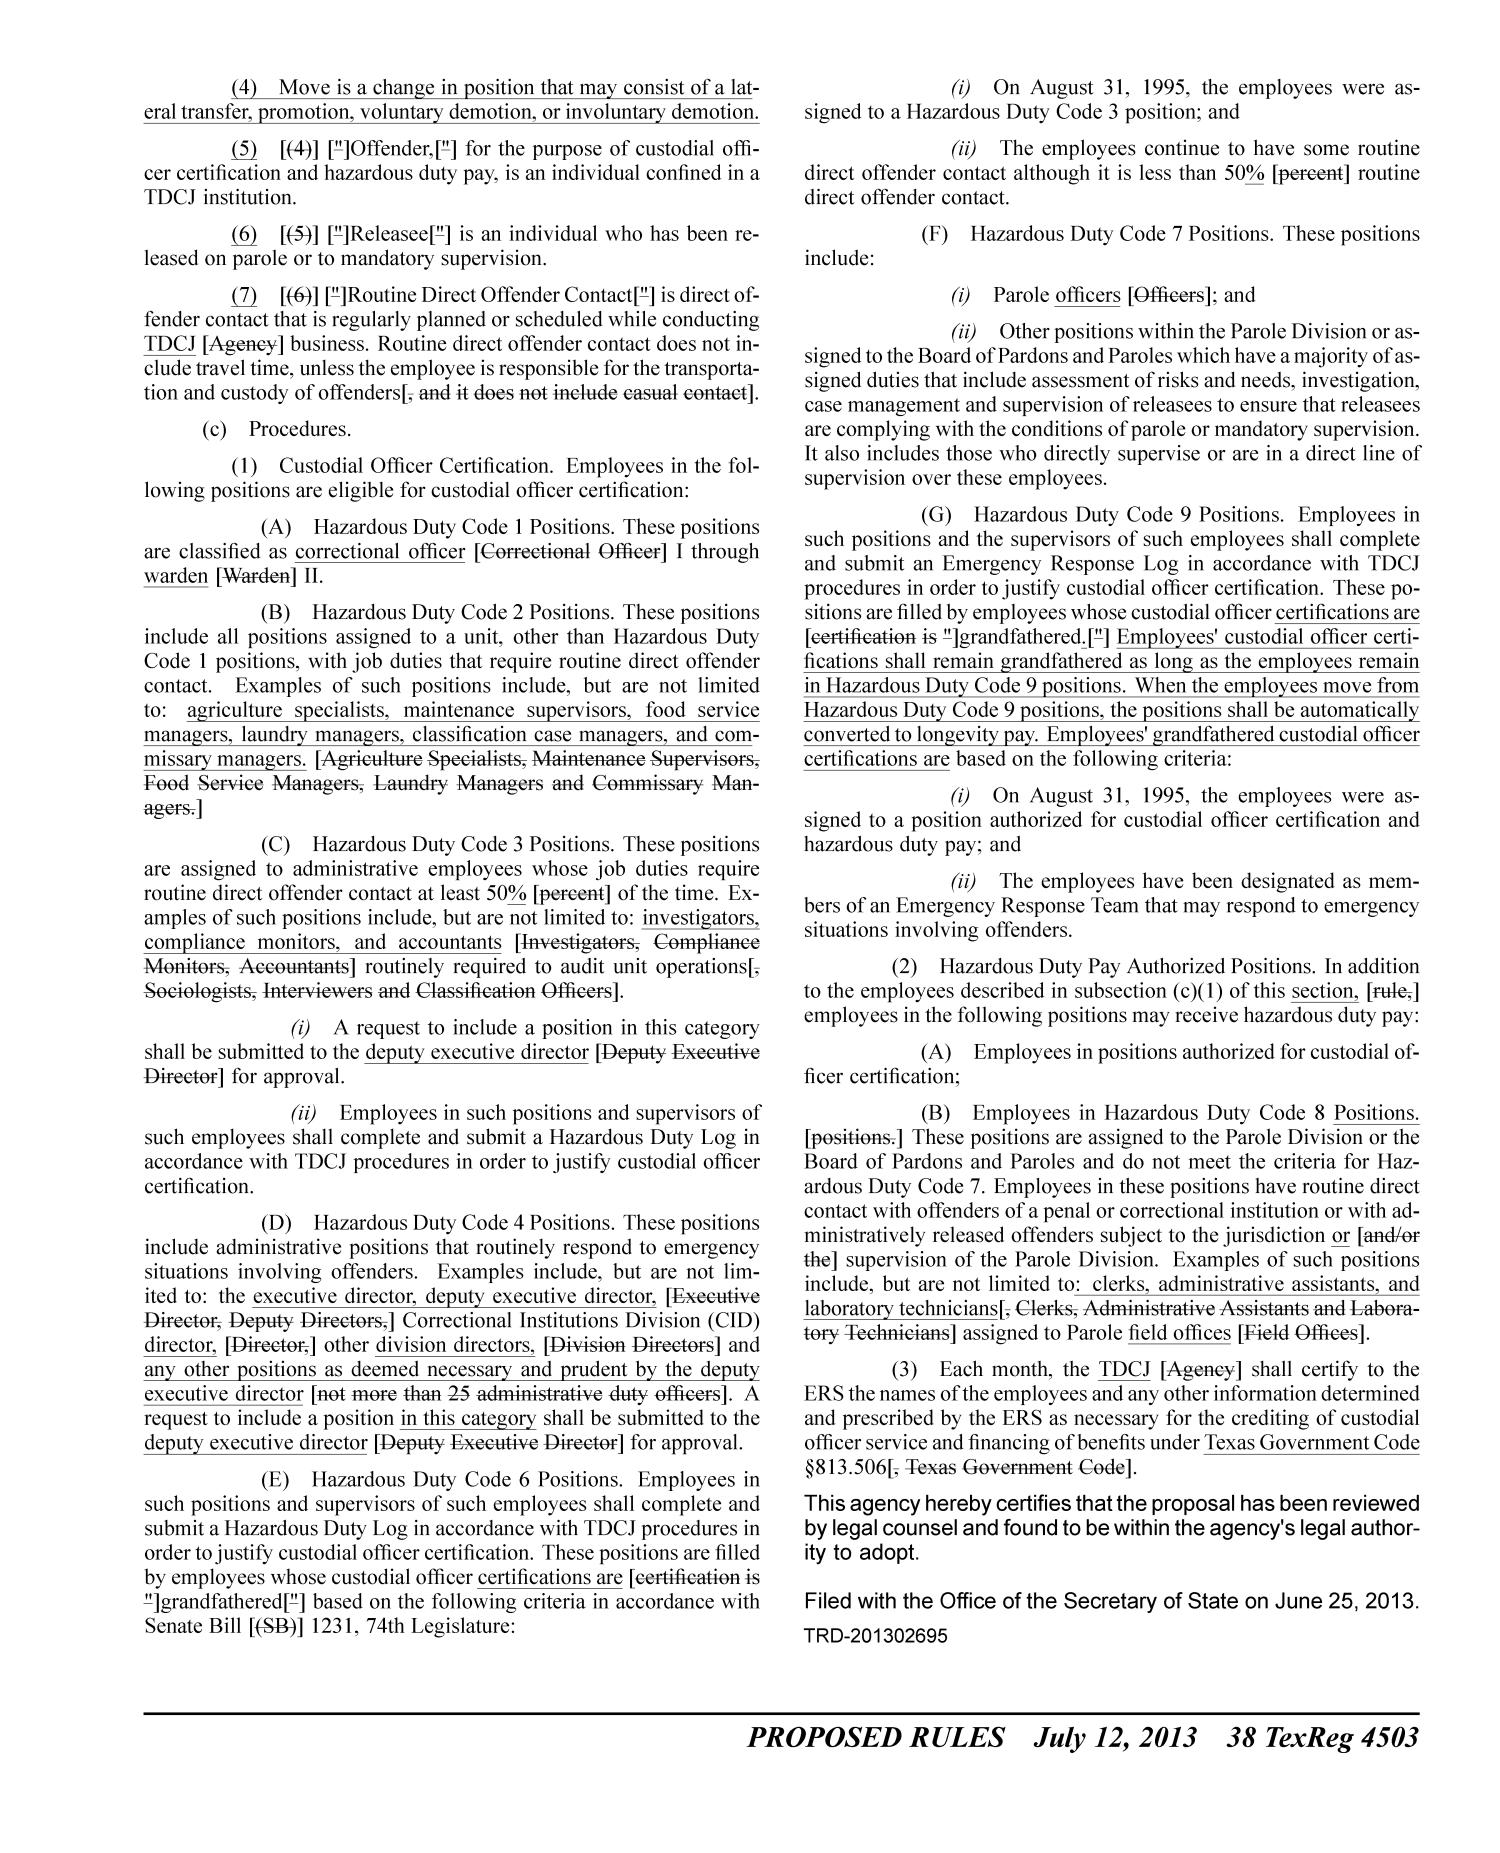 Texas Register, Volume 38, Number 28, Pages 4445-4554, July 12, 2013
                                                
                                                    4503
                                                